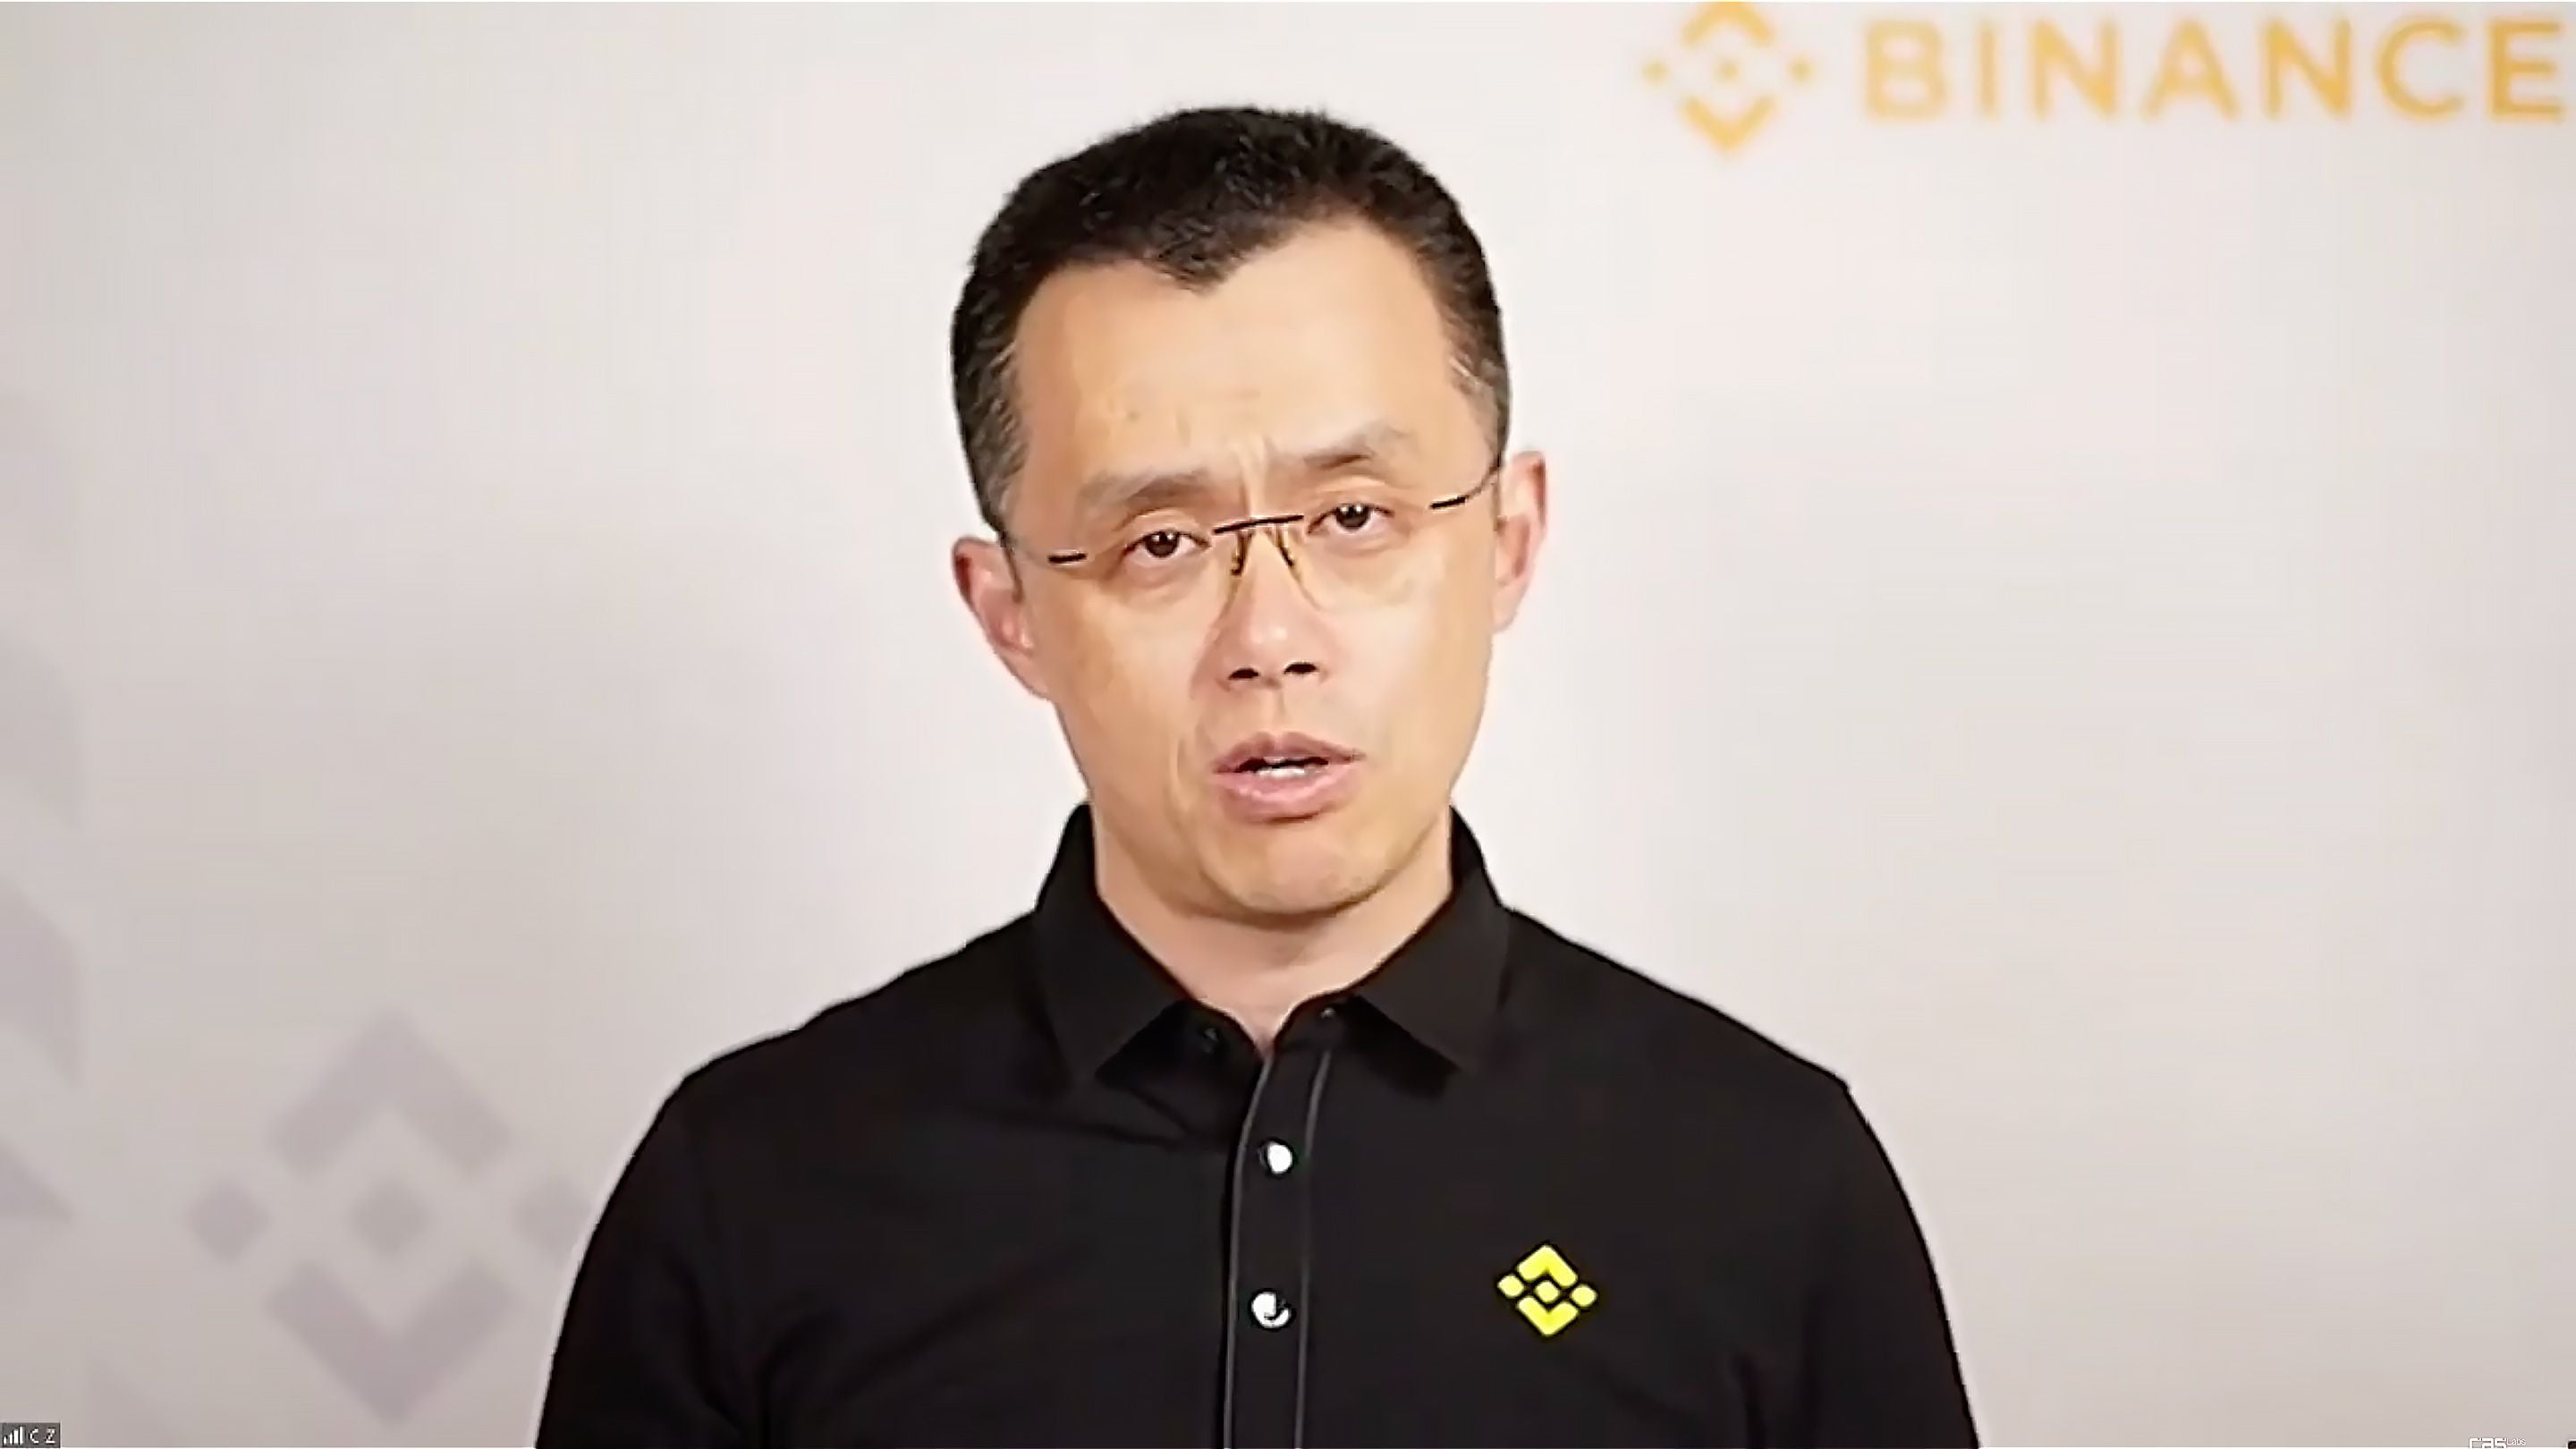 Changpeng Zhao, CEO of Binance (Casper Labs)